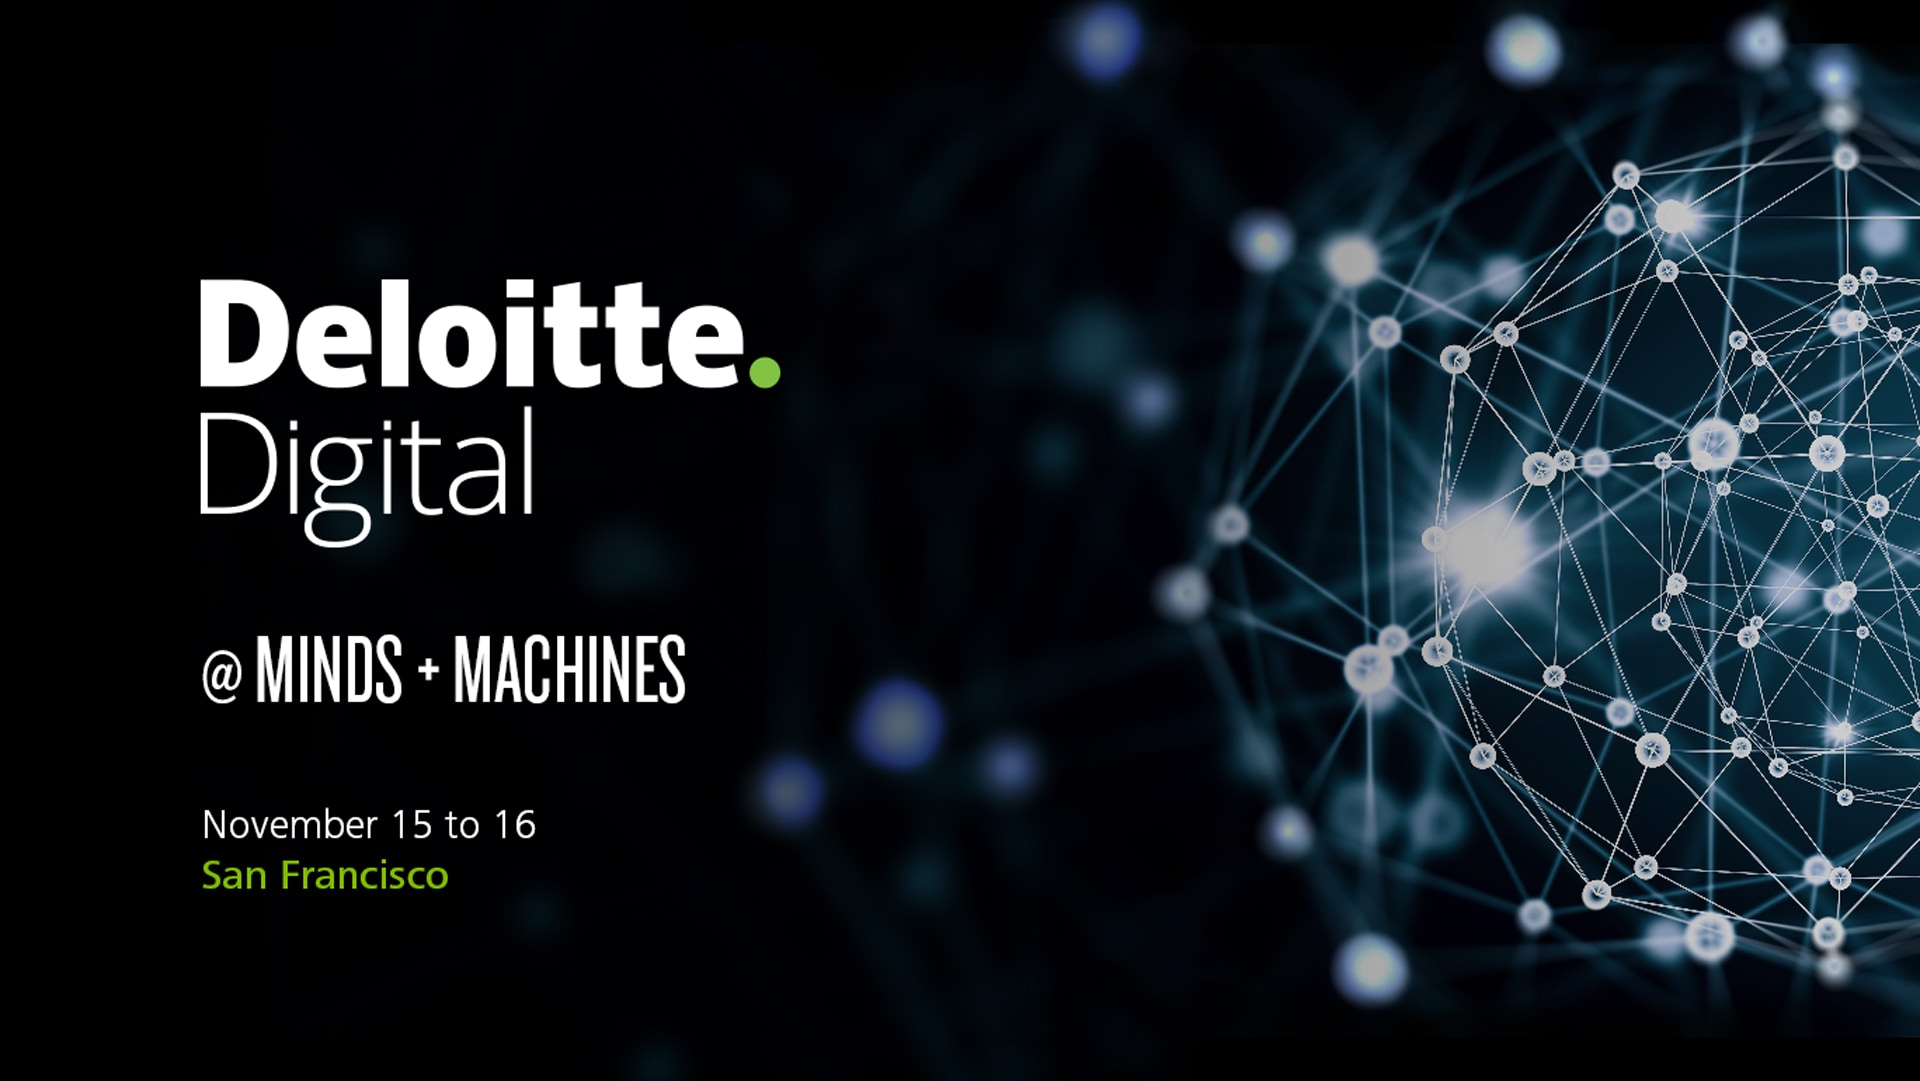 Deloitte Digital at GE Minds & Machines 2016, San Francisco.